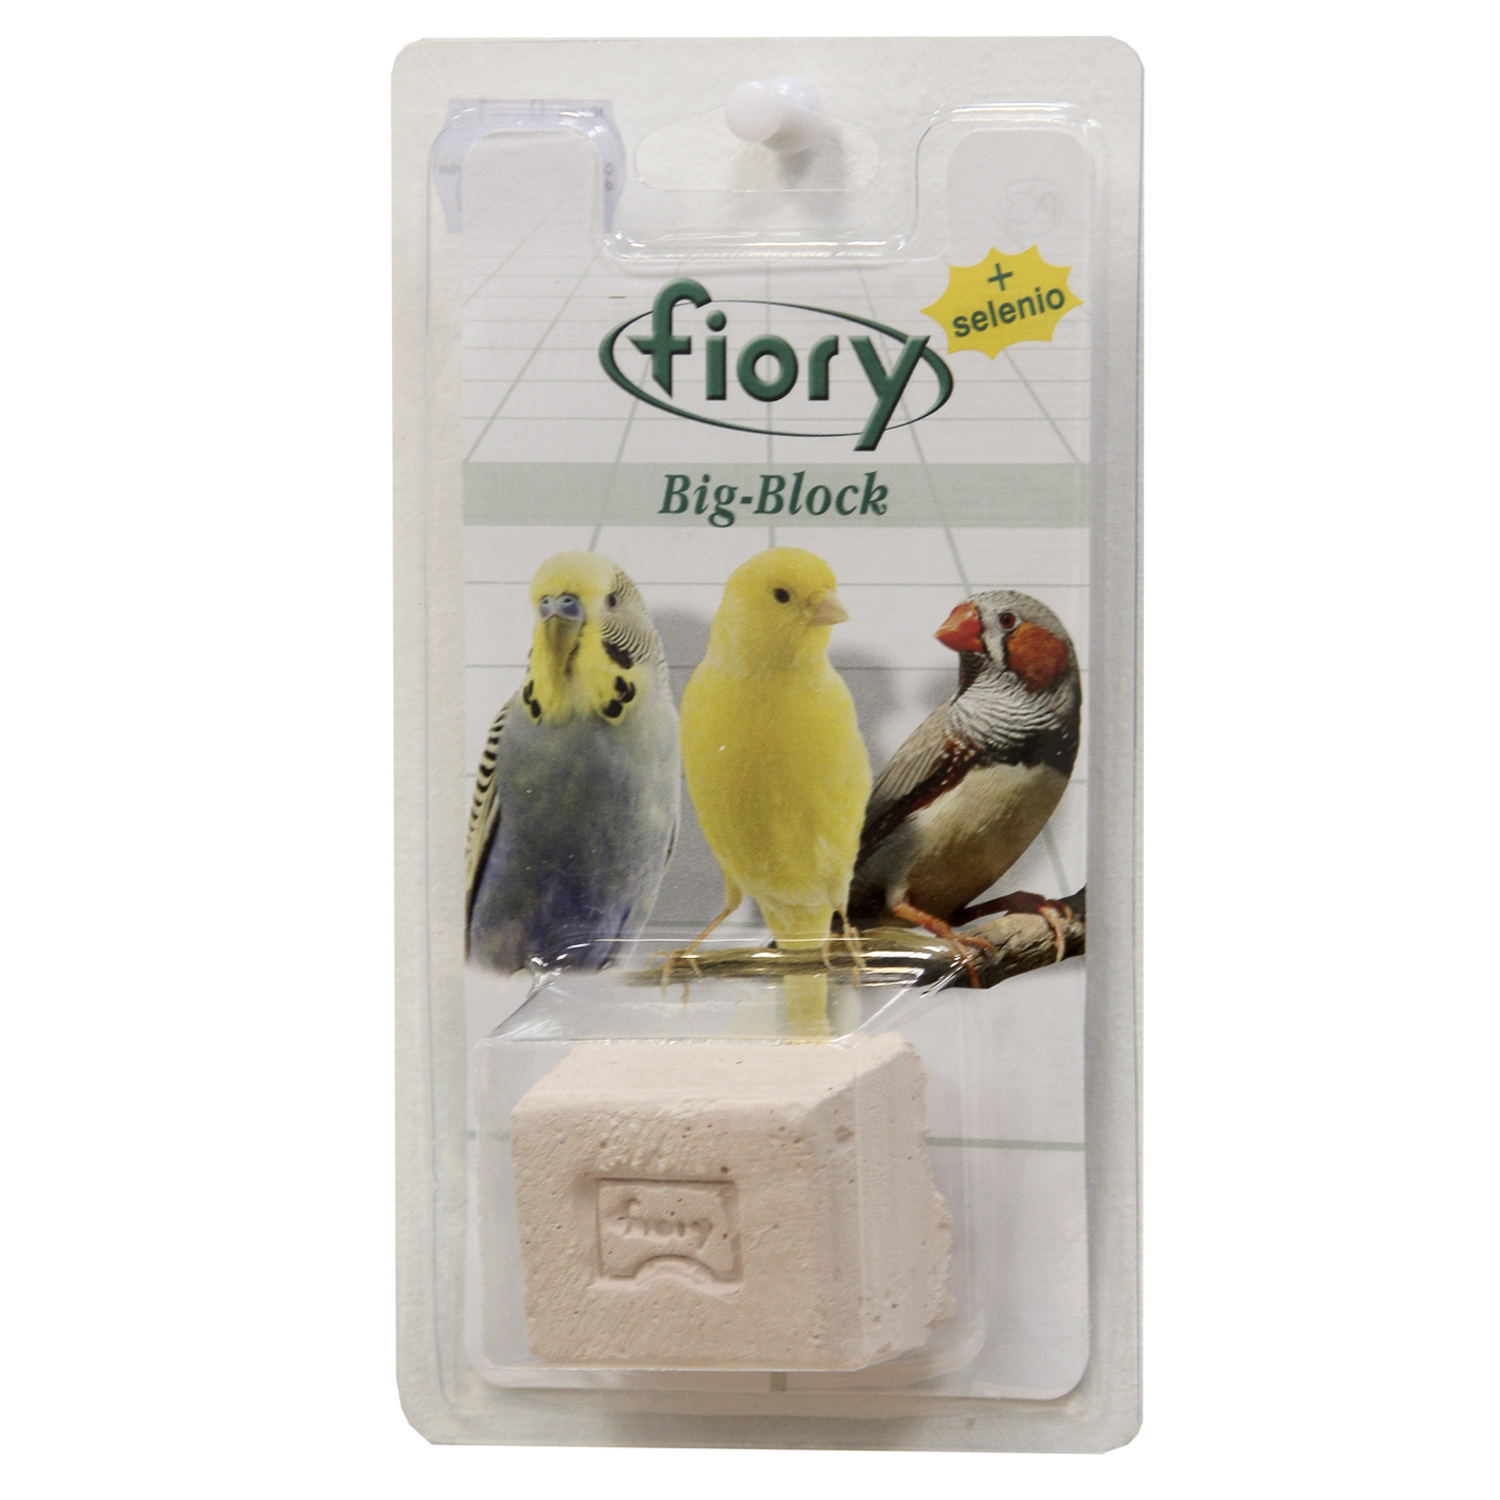 Fiory Fiory био-камень для птиц, с селеном (100 г) fiory fiory био камень для птиц с лавандой в форме сердца 45 г